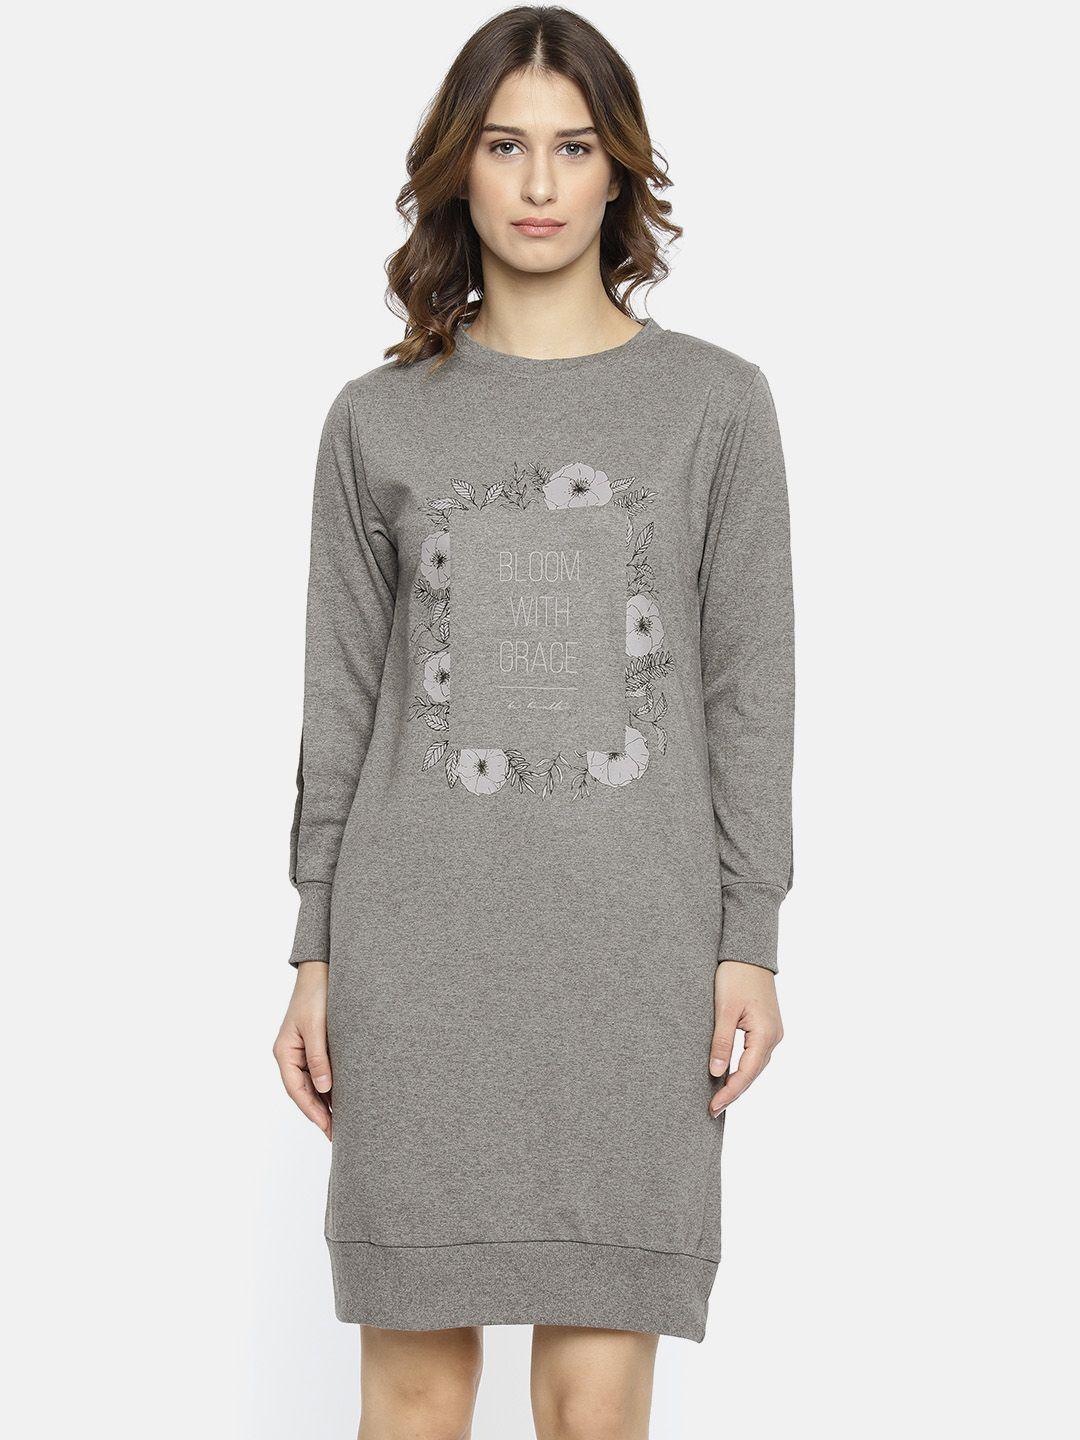 evah-london-women-grey-melange-printed-sheath-dress